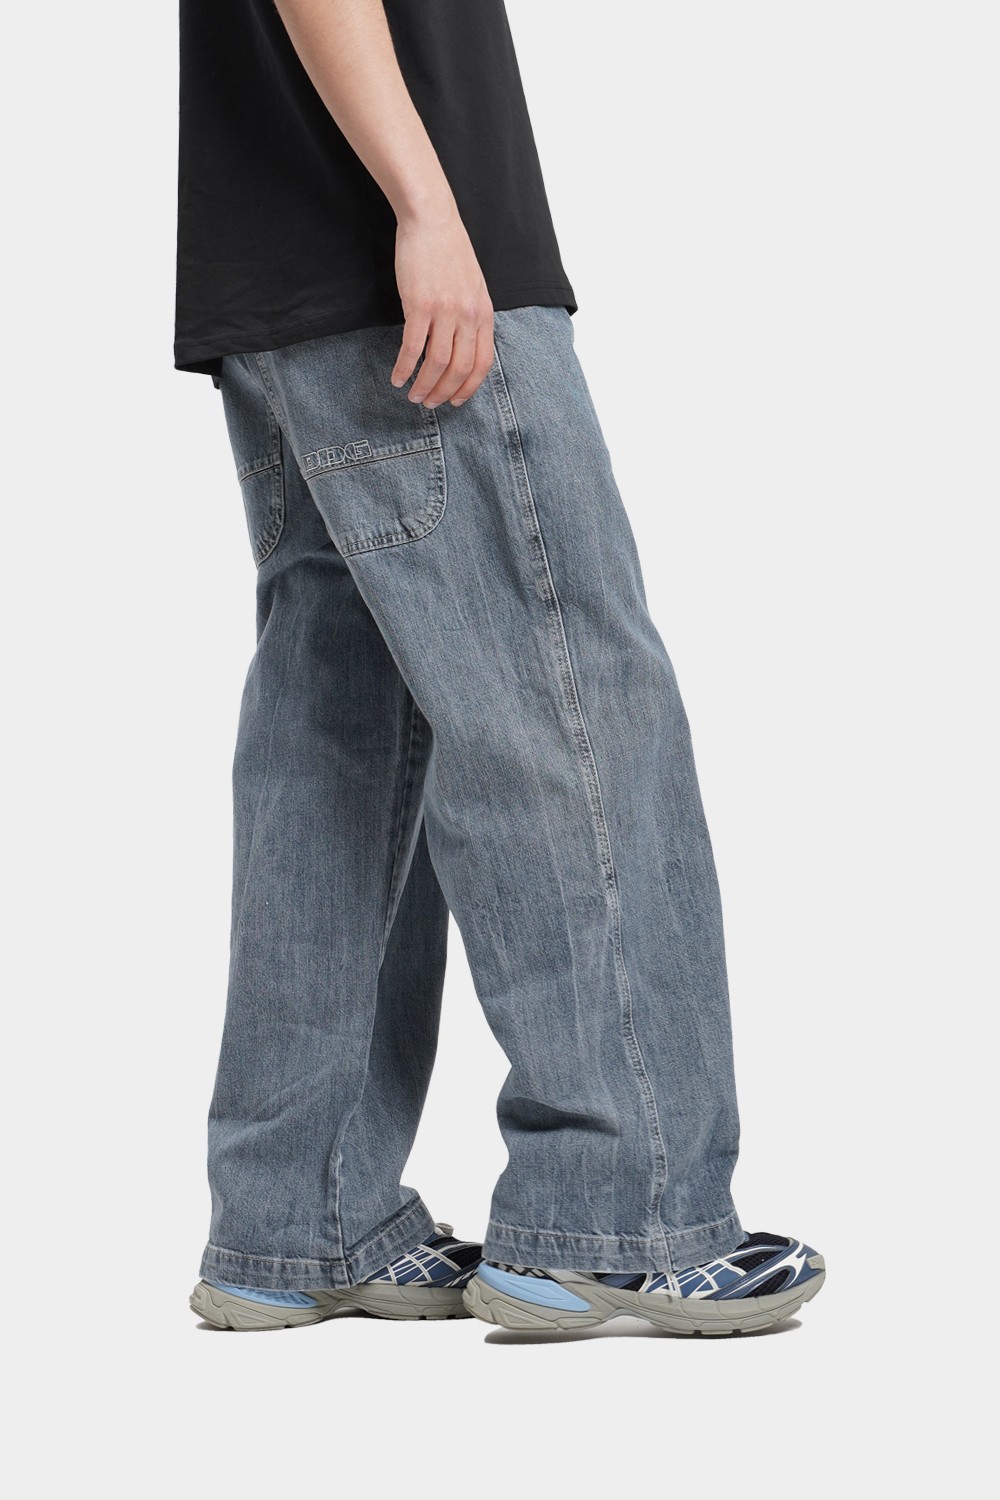 Ultra Baggy Grey Wash Skate Jeans (URBN-B-201)